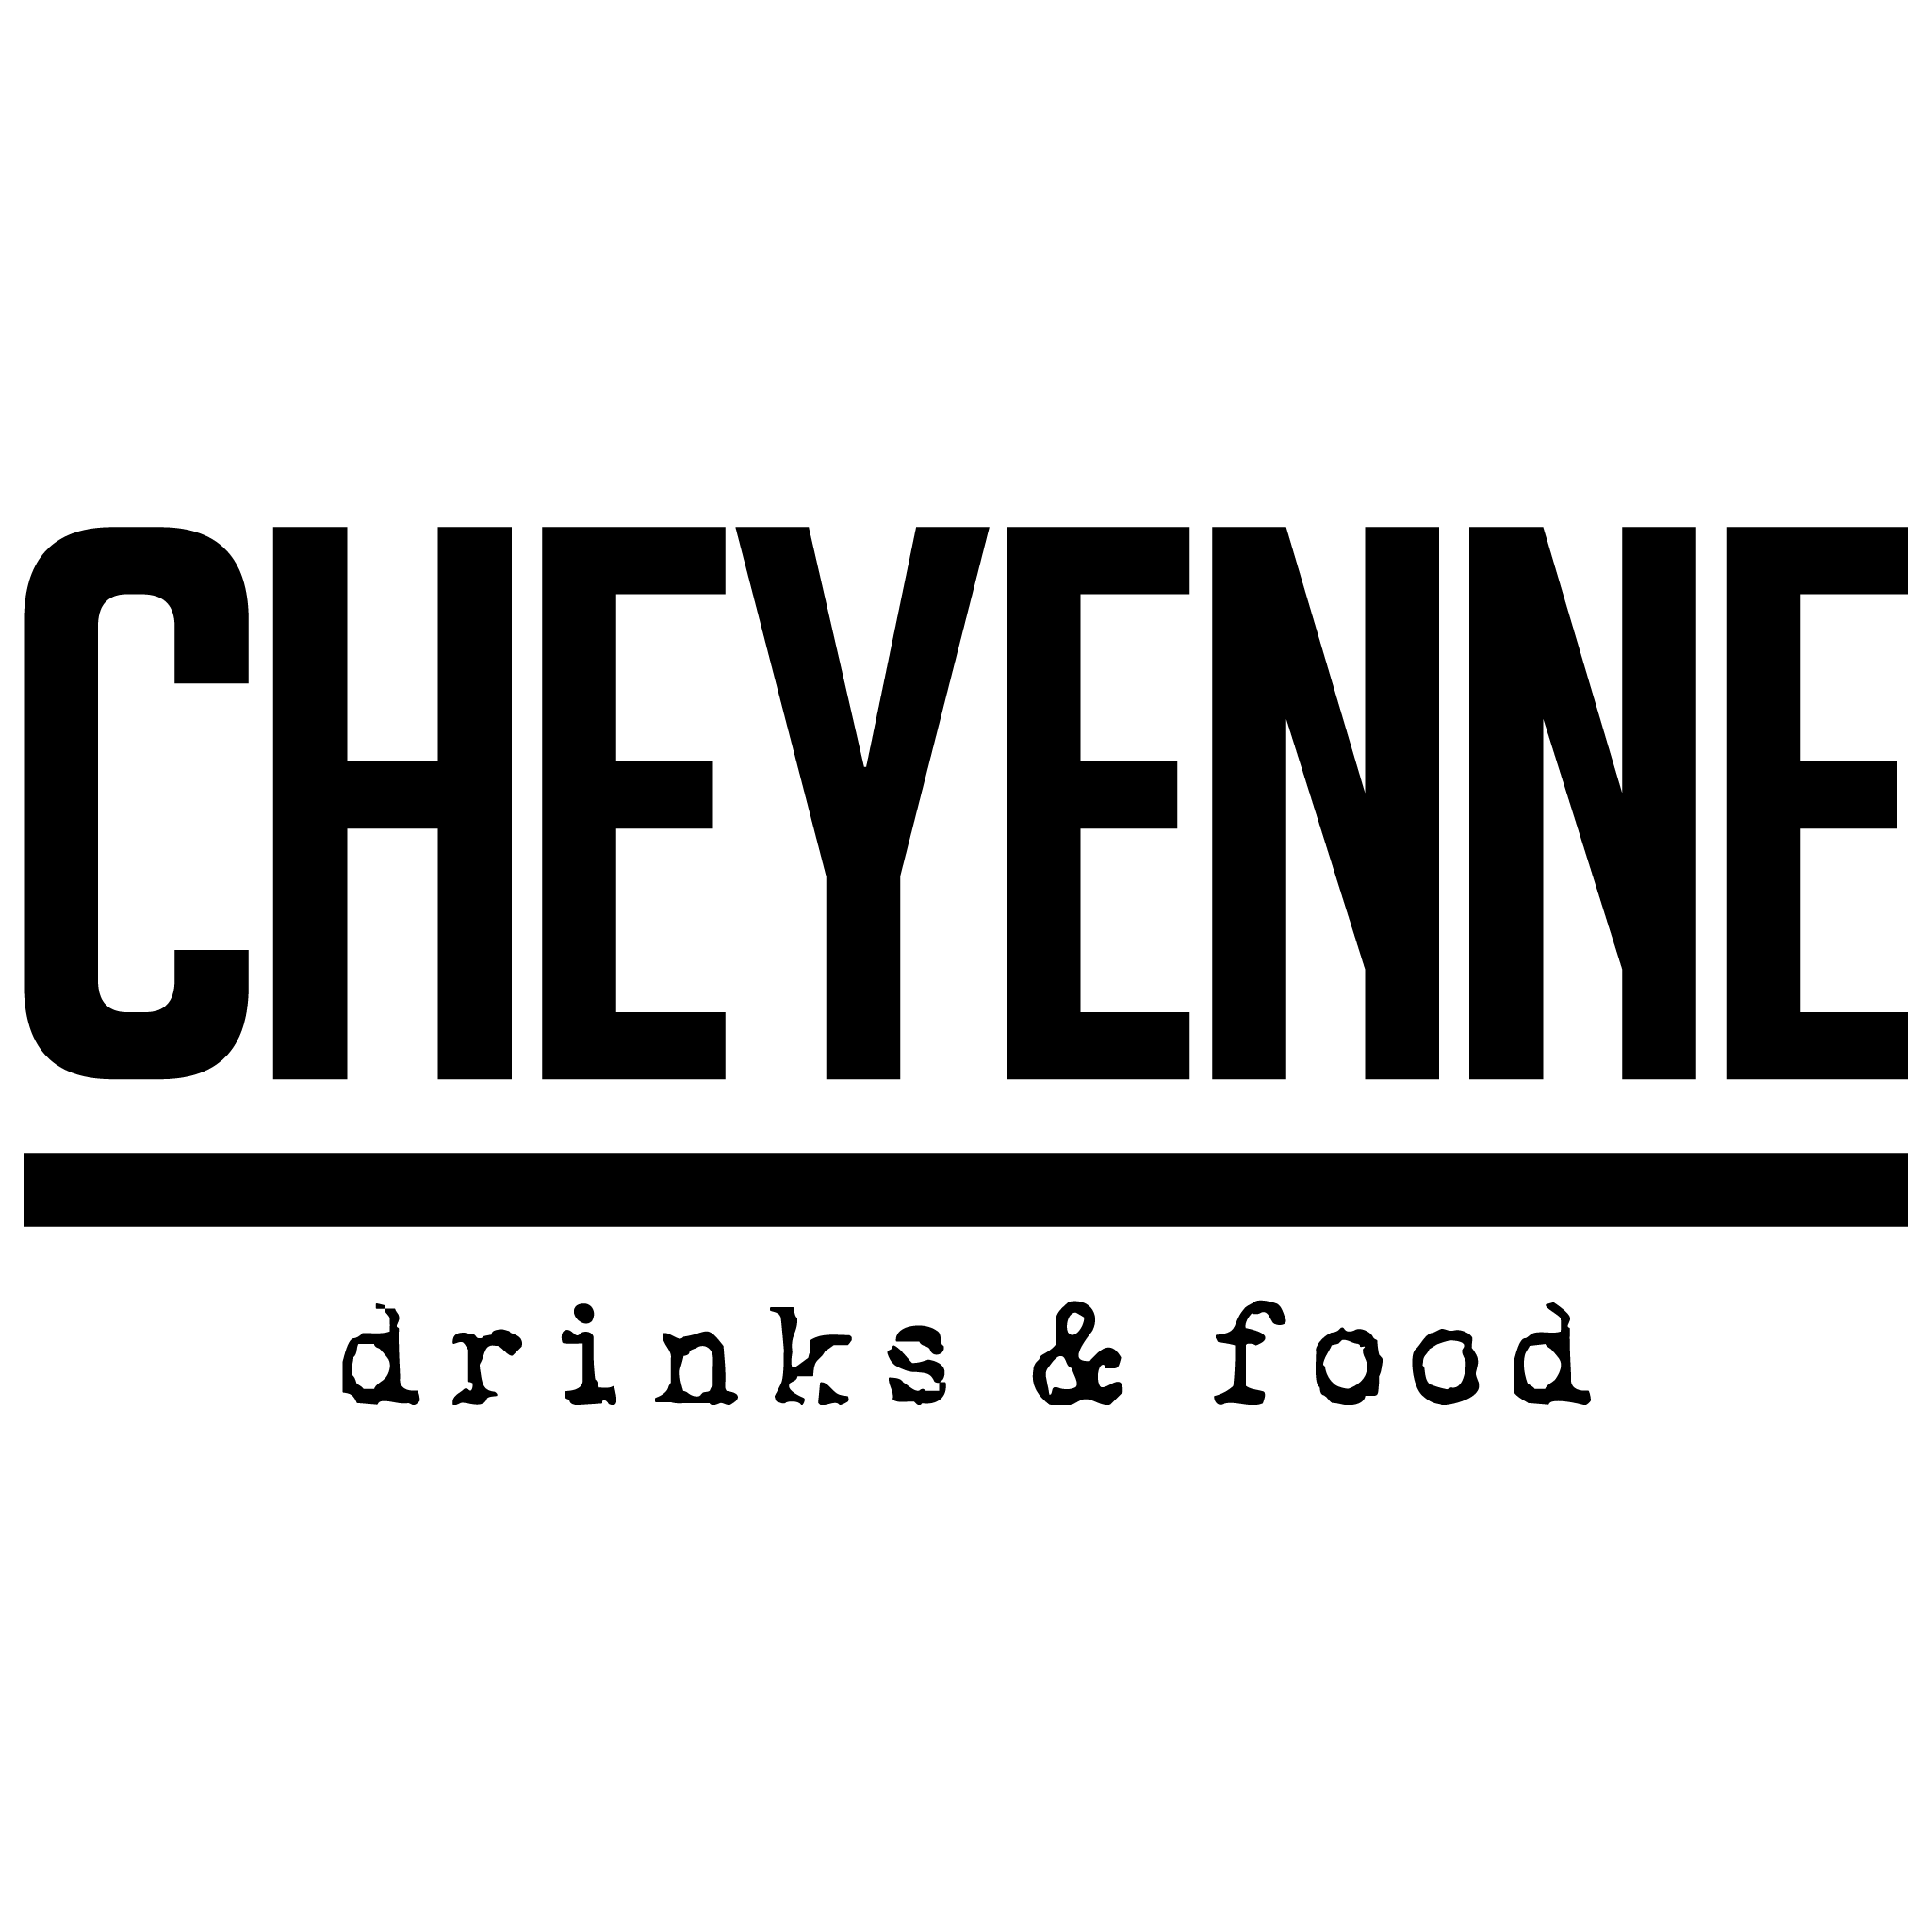 Cheyenne Logo